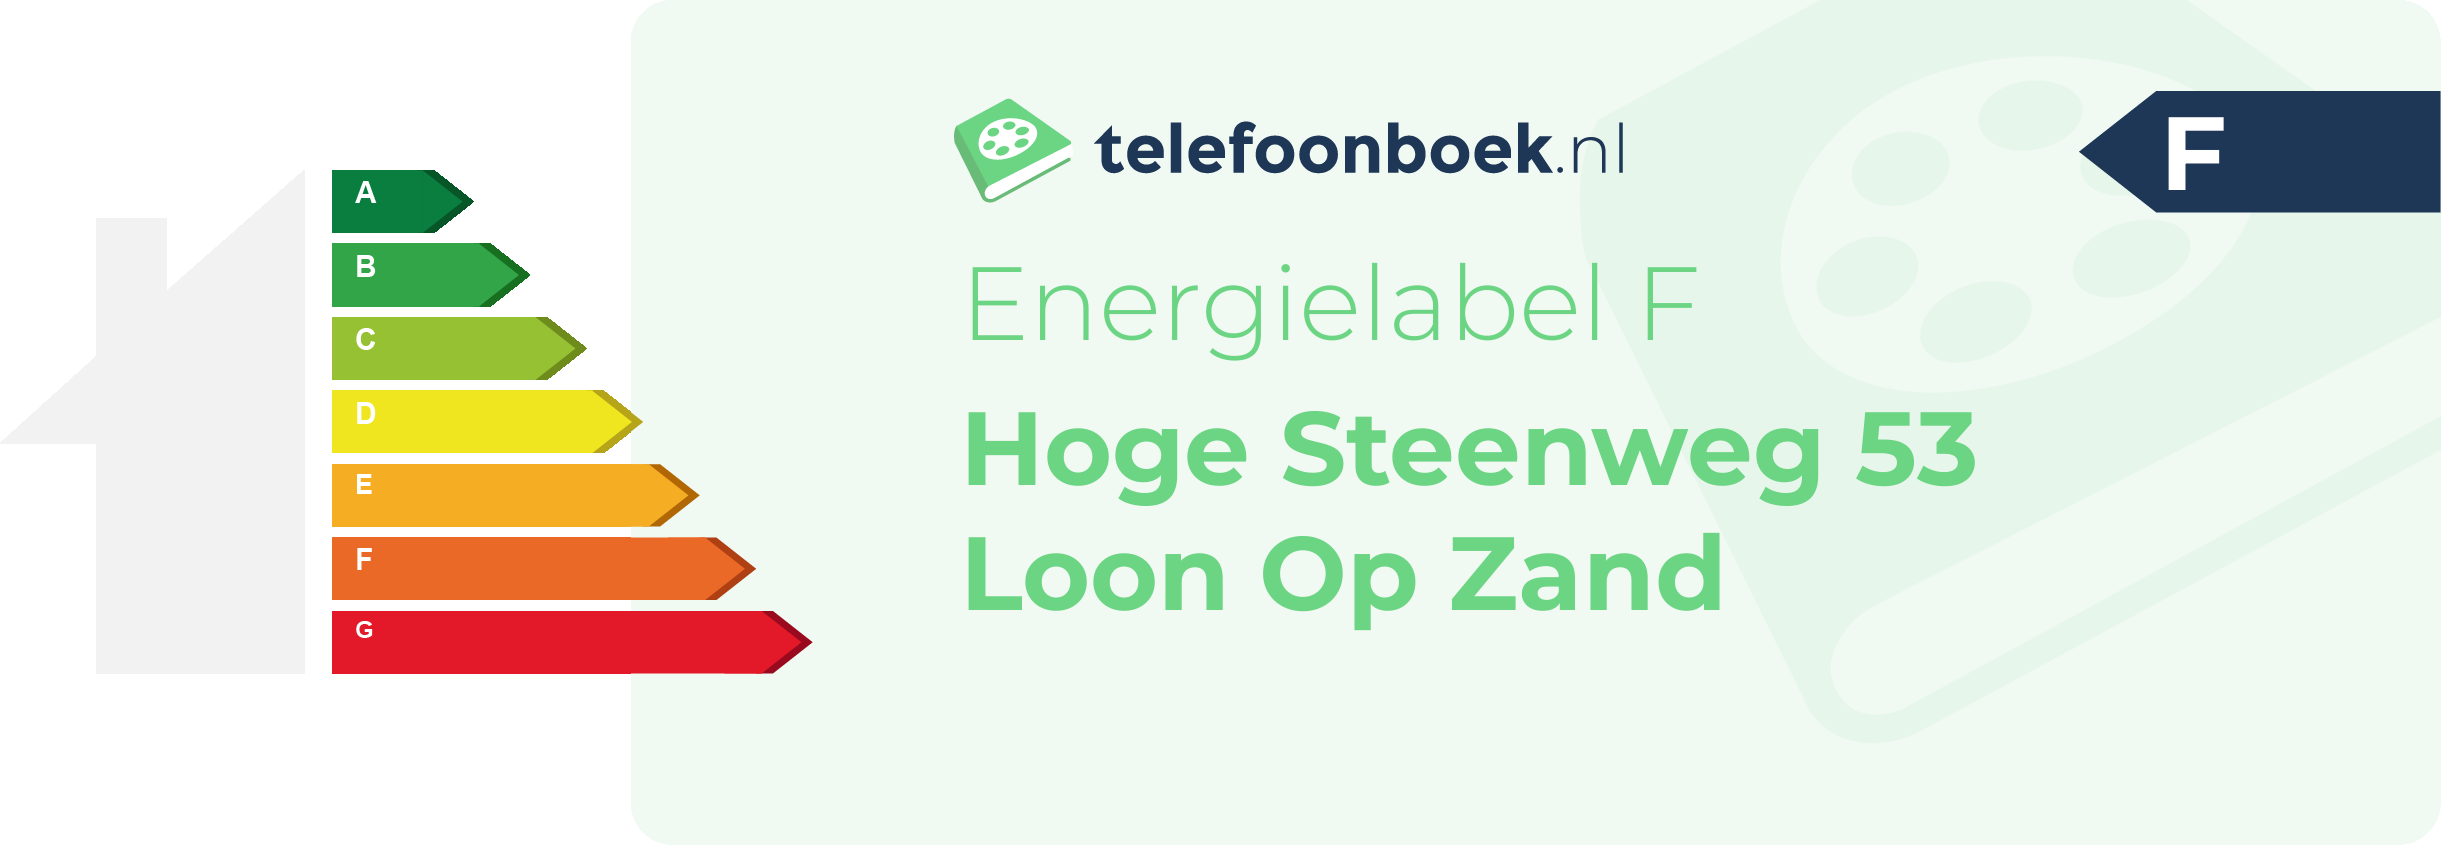 Energielabel Hoge Steenweg 53 Loon Op Zand